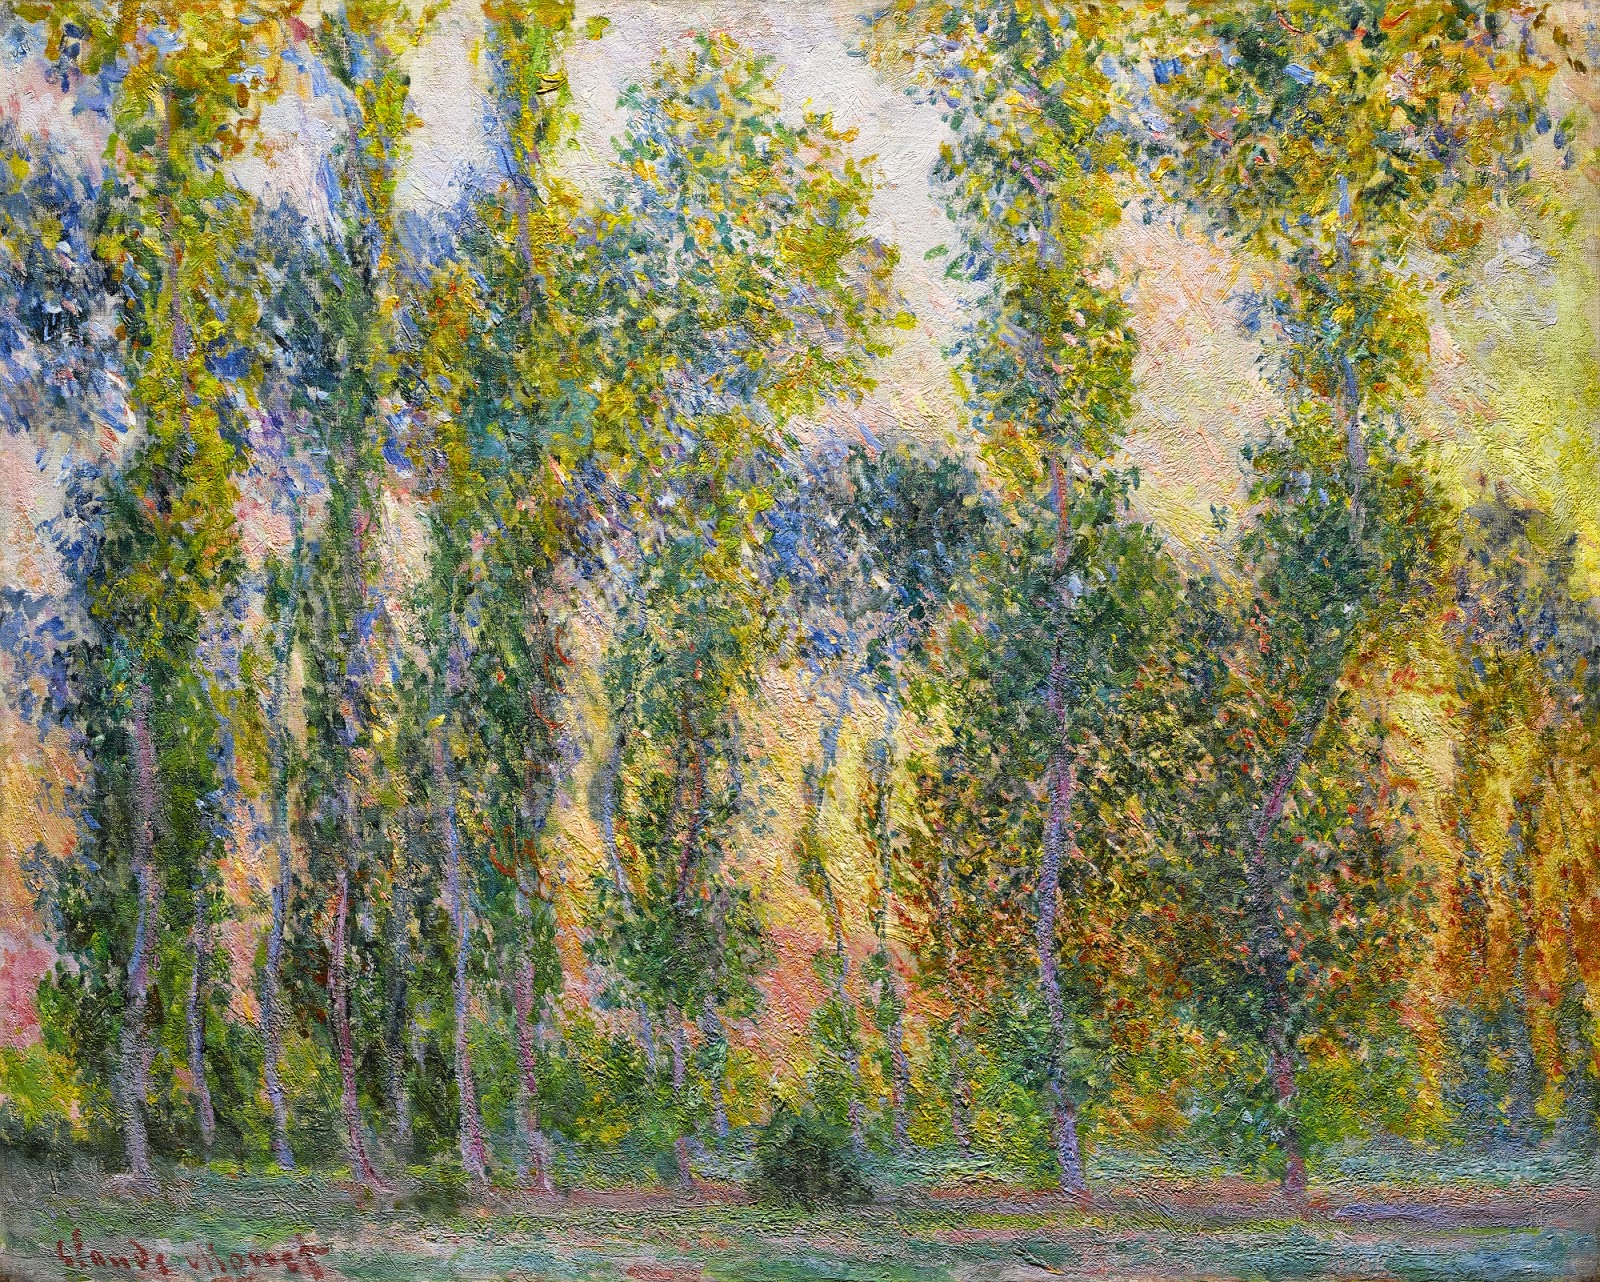 Claude+Monet-1840-1926 (511).jpg